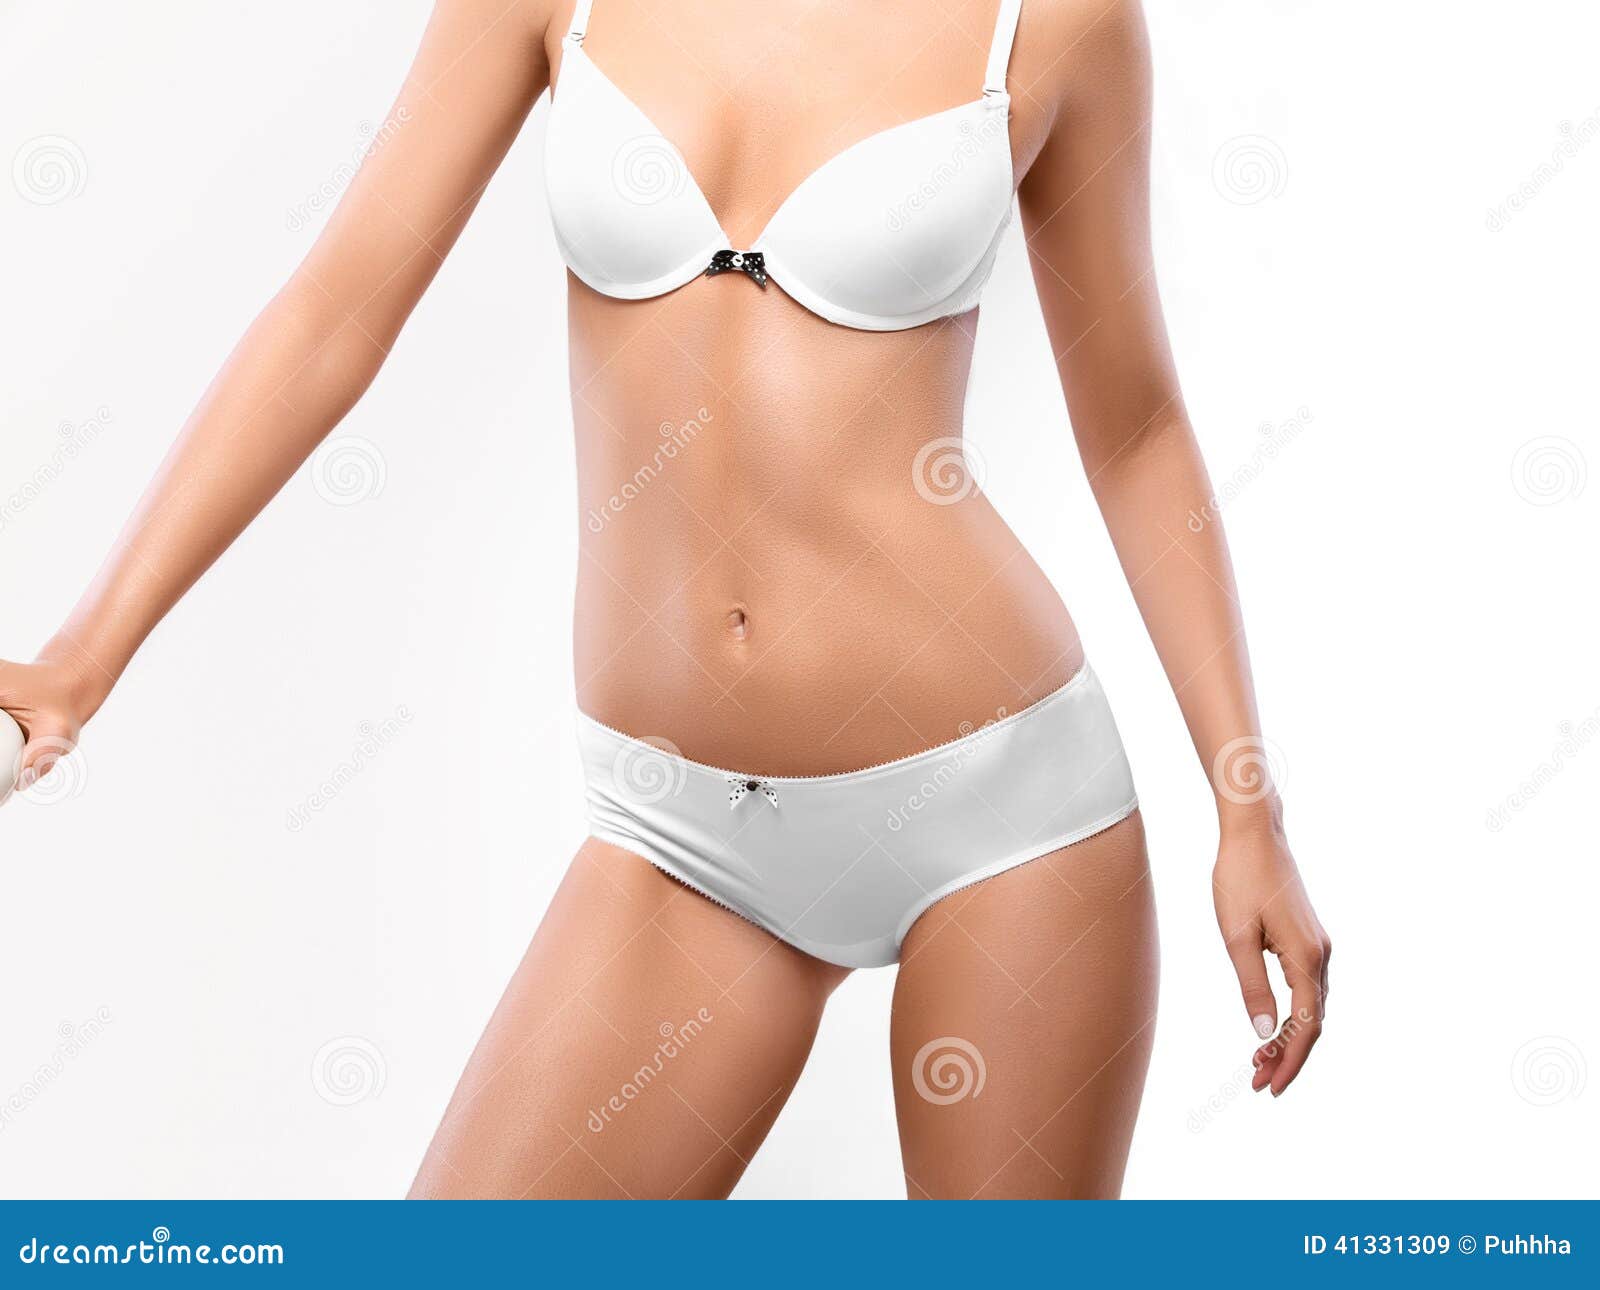 https://thumbs.dreamstime.com/z/perfect-female-body-beautiful-woman-underwear-41331309.jpg